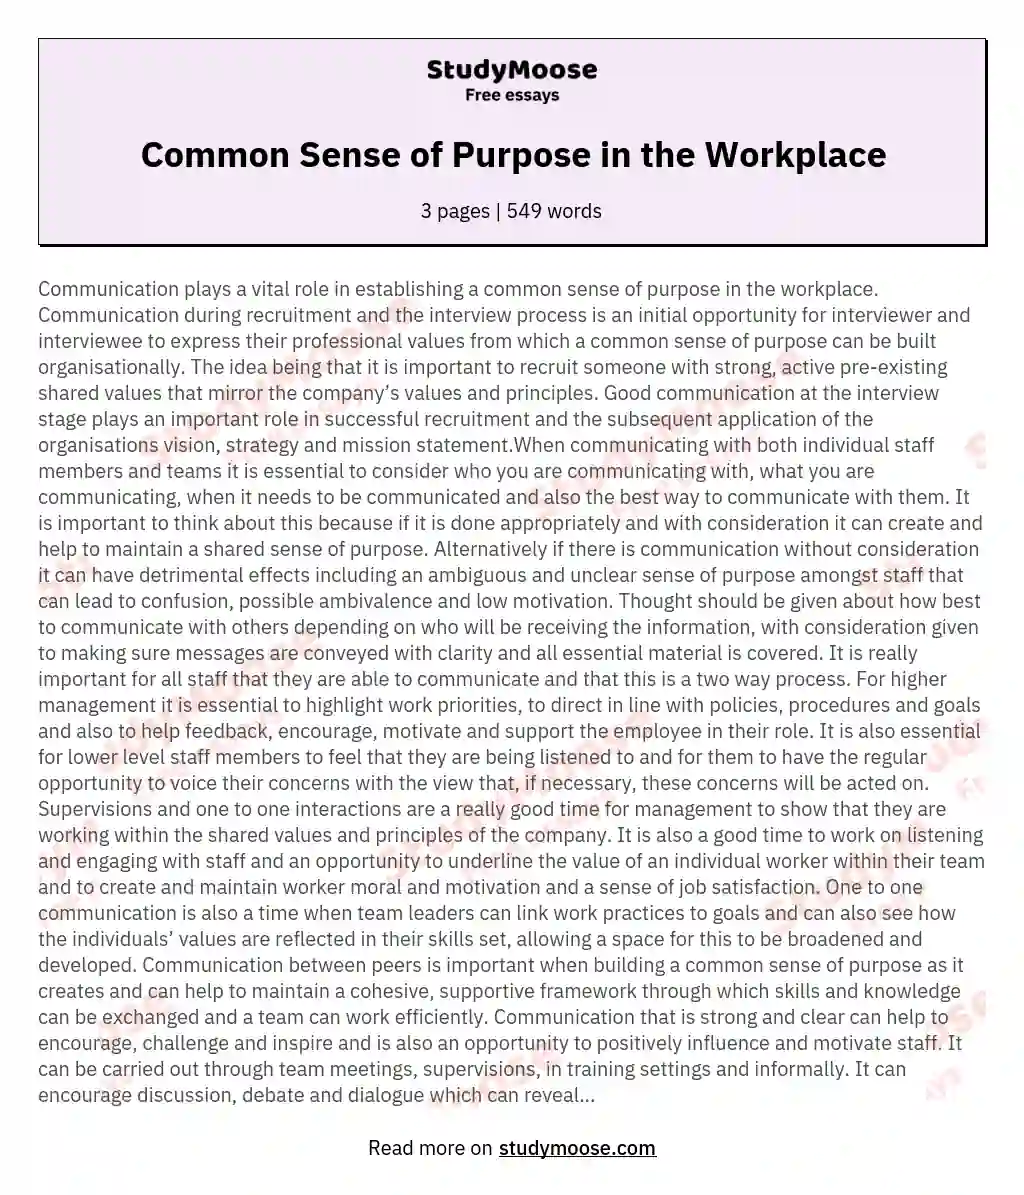 Common Sense of Purpose in the Workplace essay